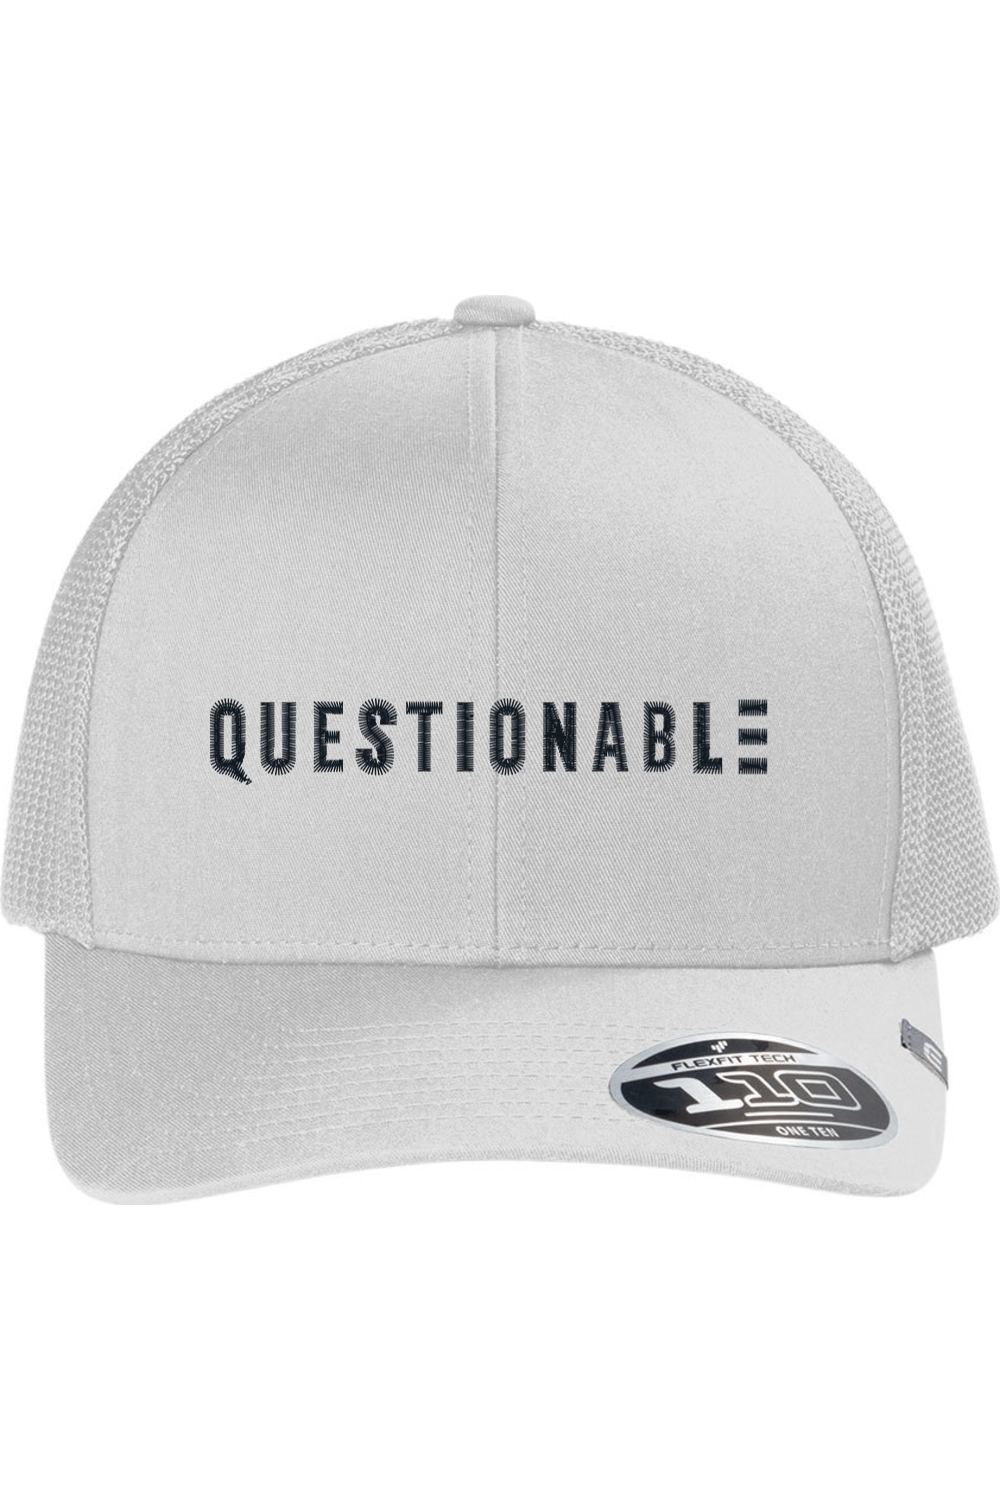 Questionable TravisMathew Trucker Cap - Embroidered